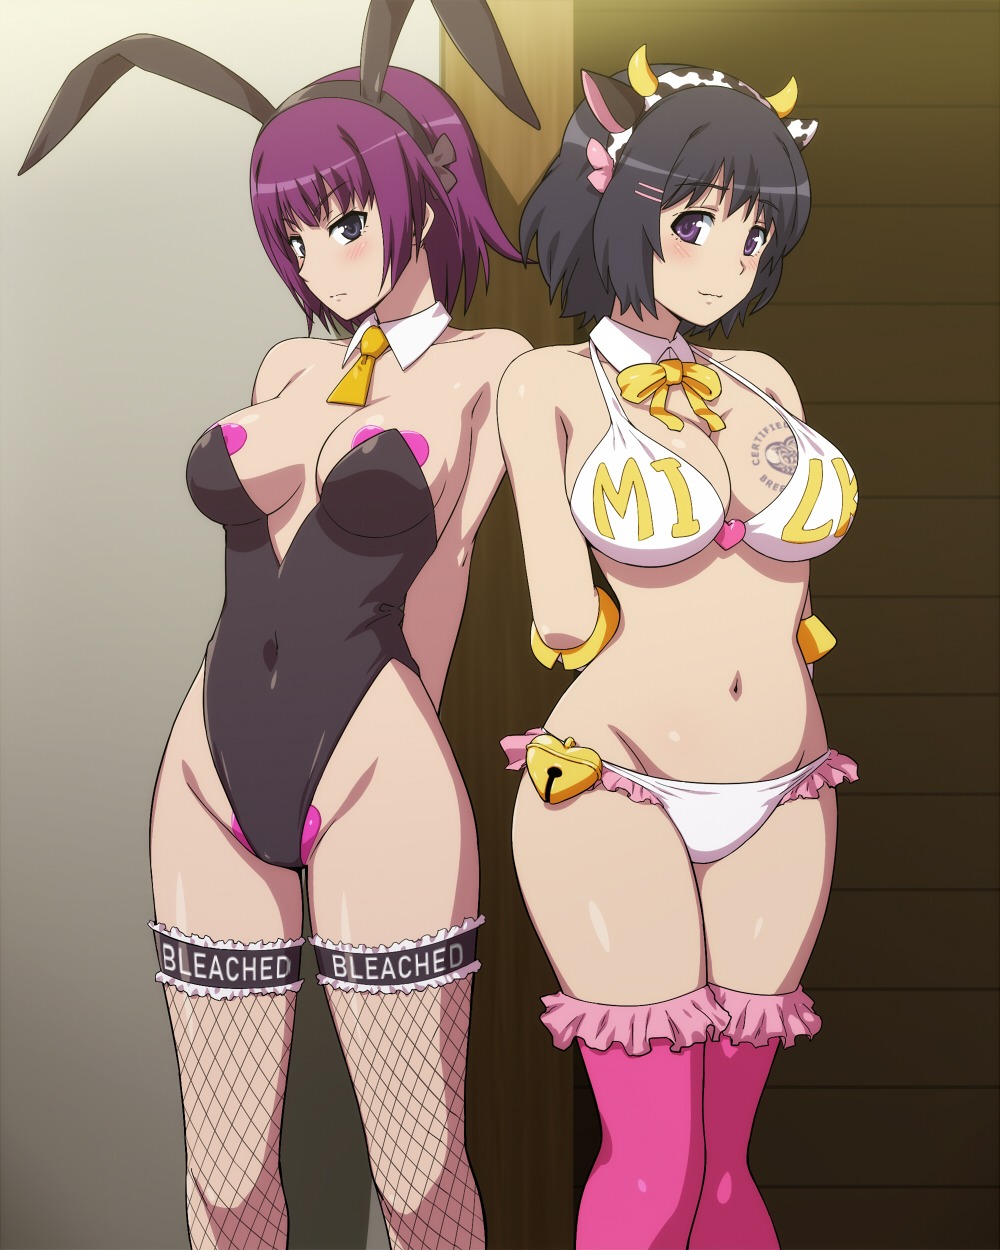 Hitagi Senjougahara and Hanekawa Tsubasa in Sexy Bunny Costumes 